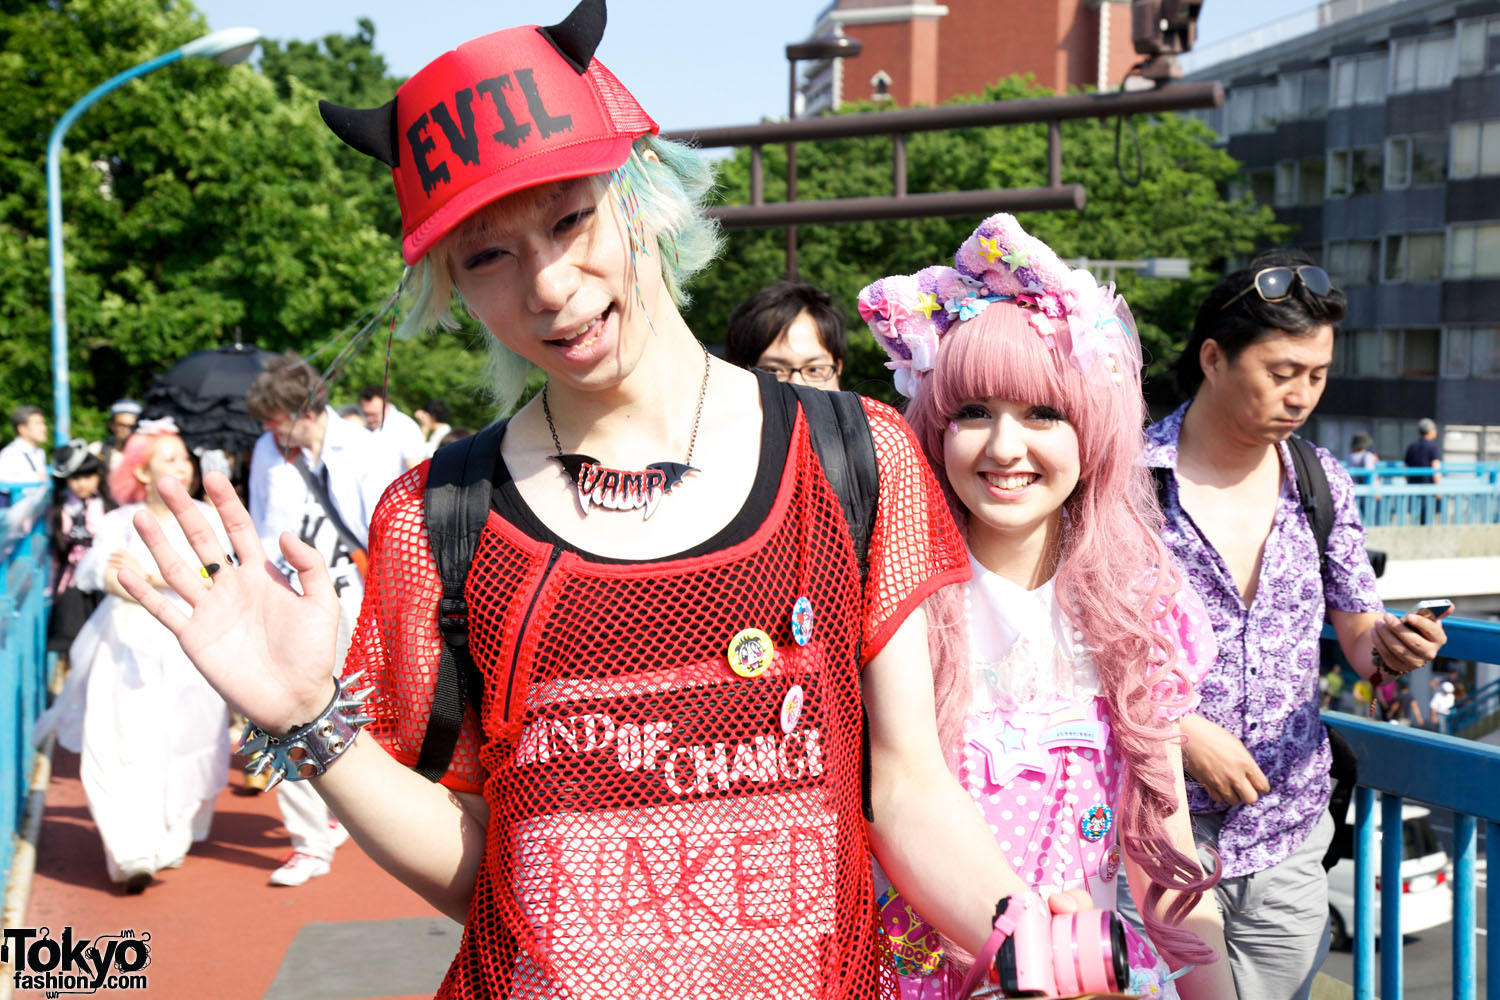 Harajuku Fashion Walk #10 - Pictures & Video